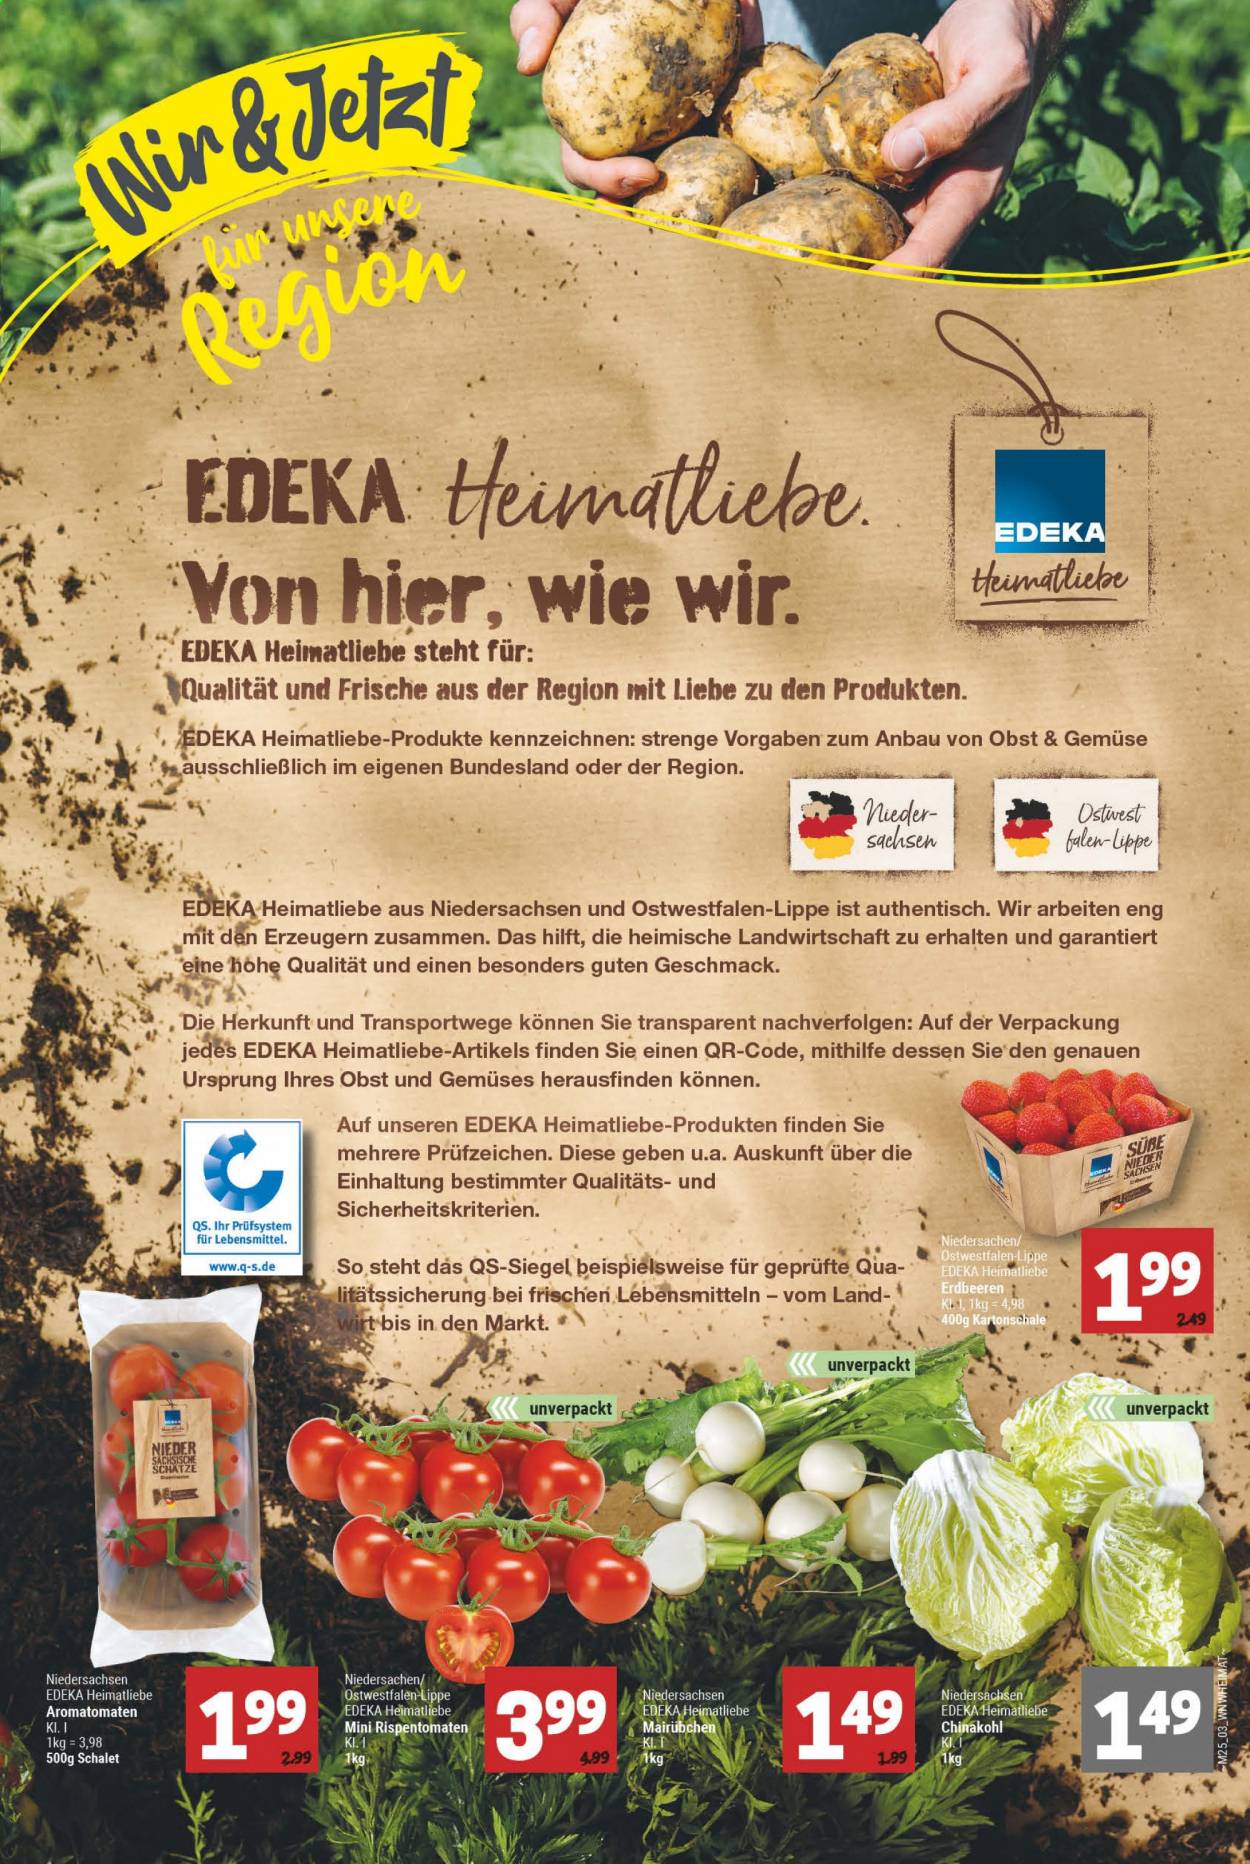 thumbnail - Prospekte Marktkauf - 21.06.2021 - 26.06.2021 - Produkte in Aktion - Rispentomaten, Chinakohl, Erdbeeren. Seite 3.